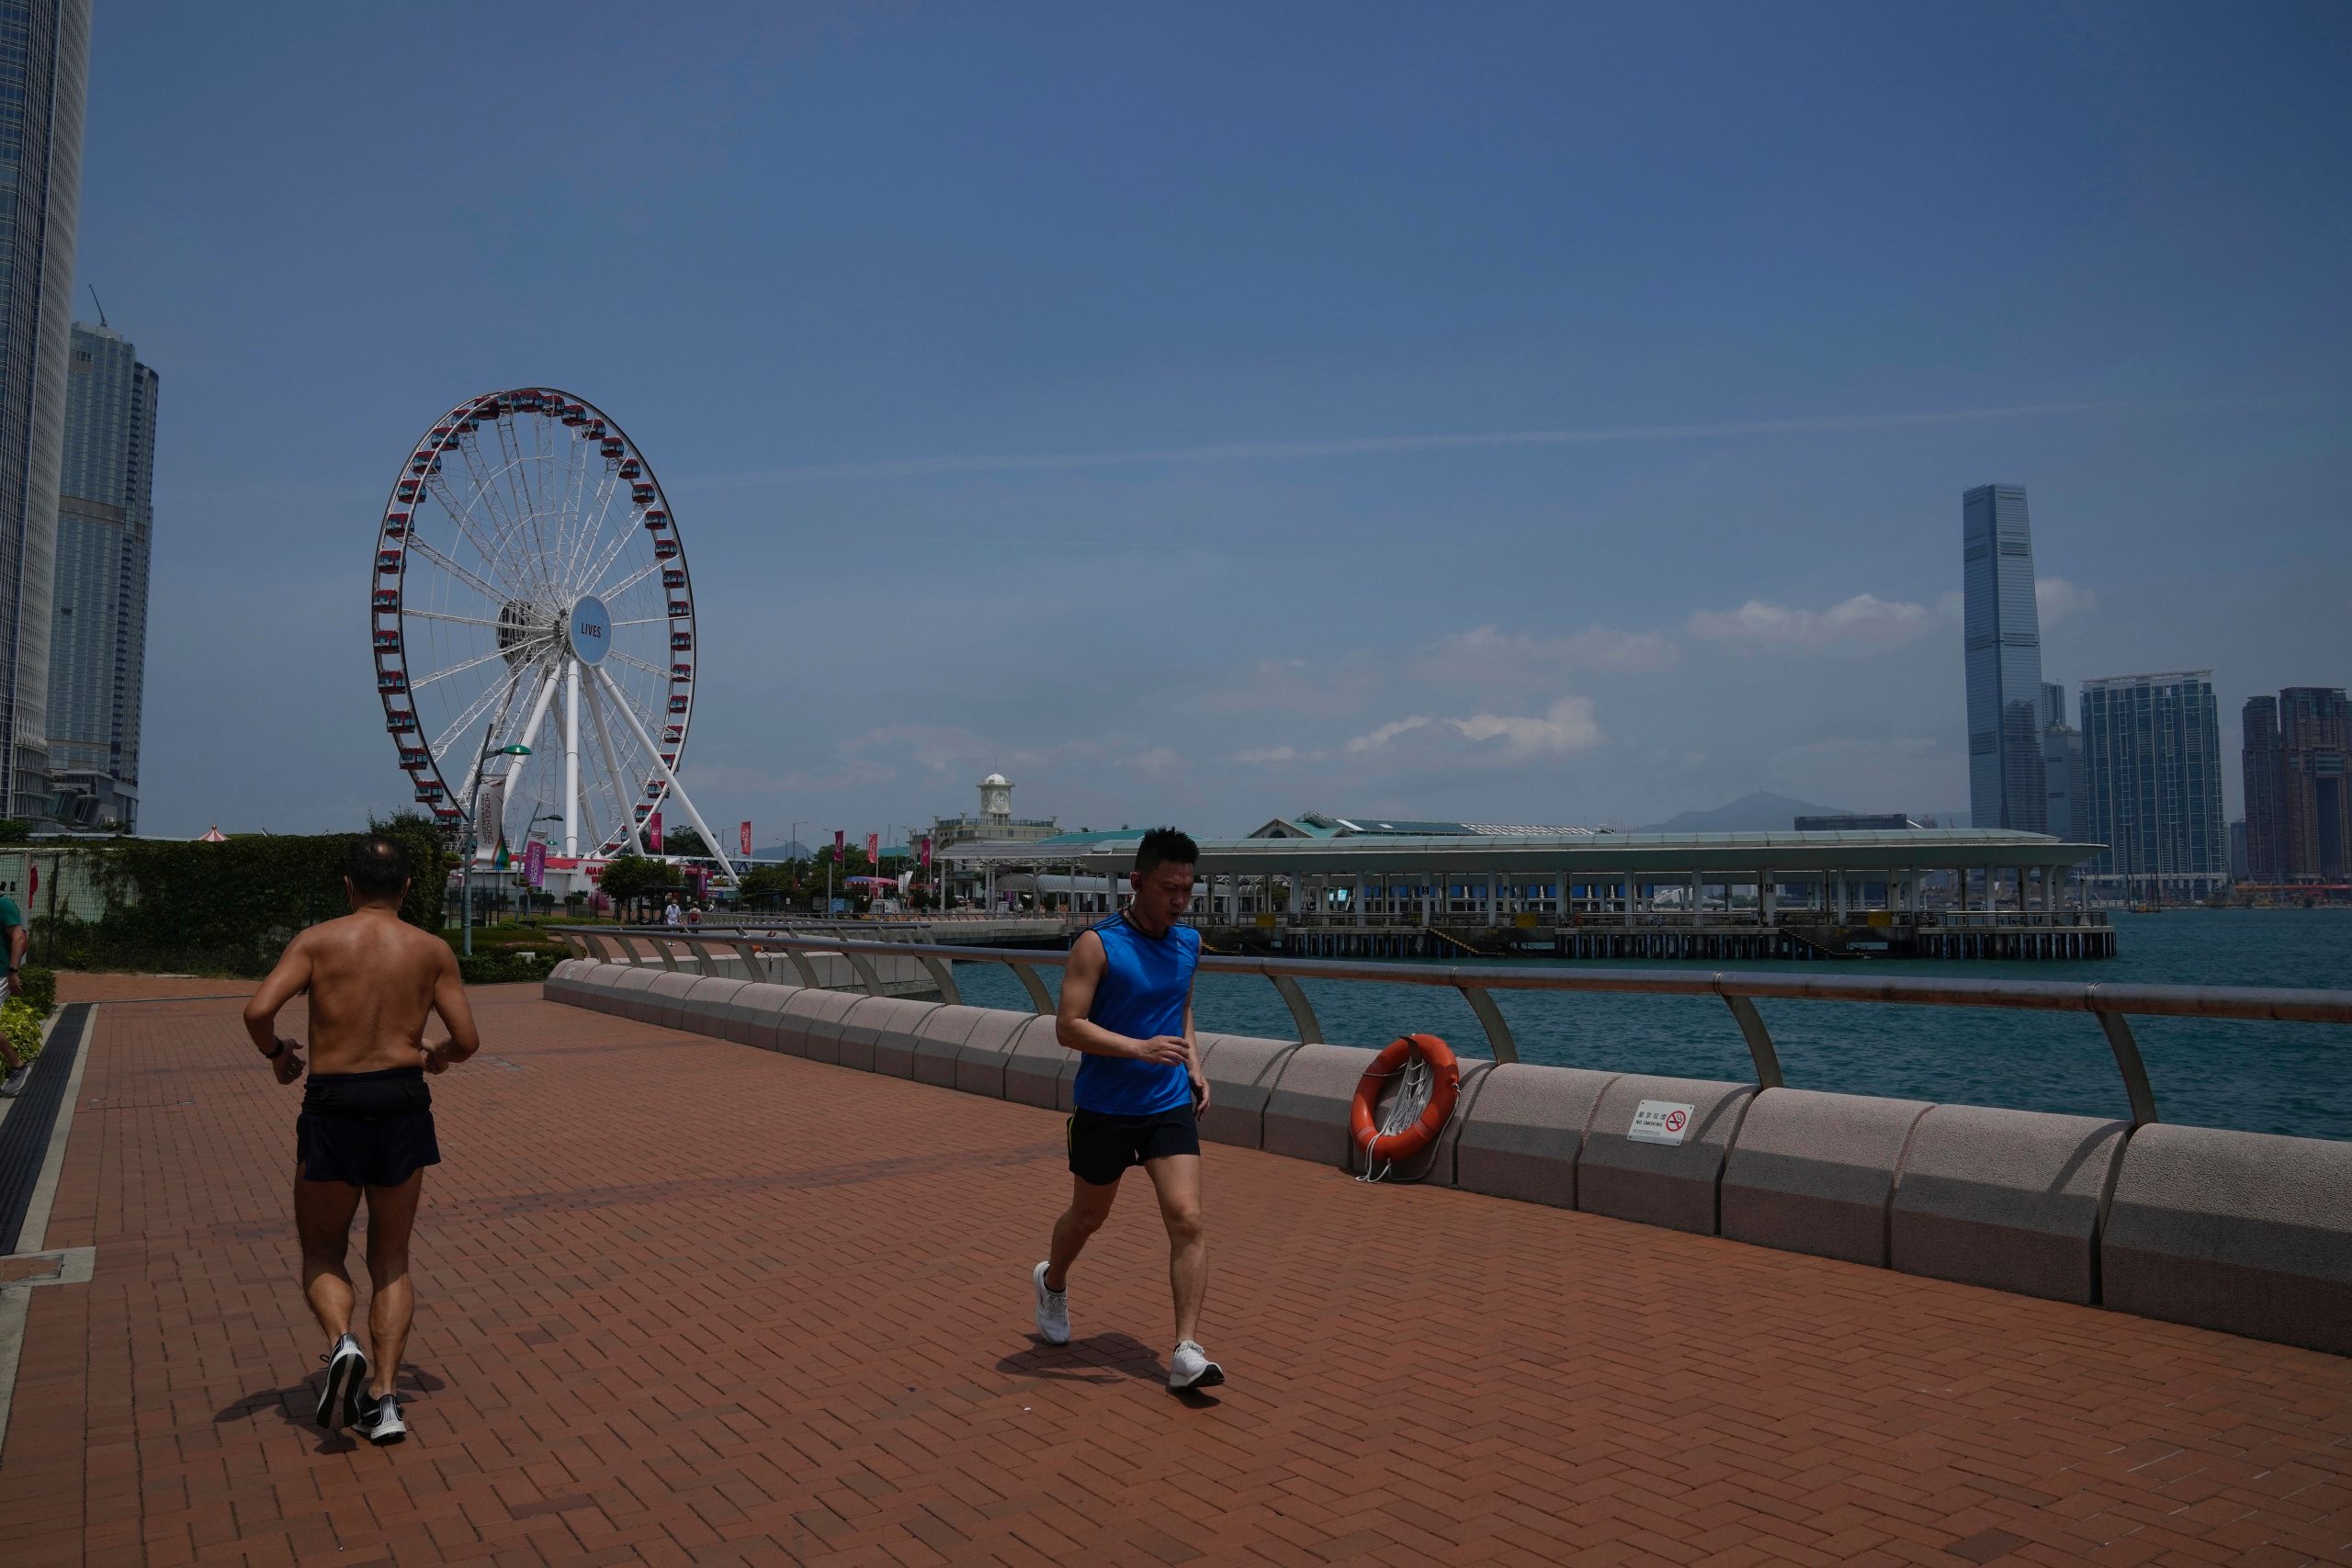 Beijing relaxes quarantine rules as Hong Kong reopens beaches